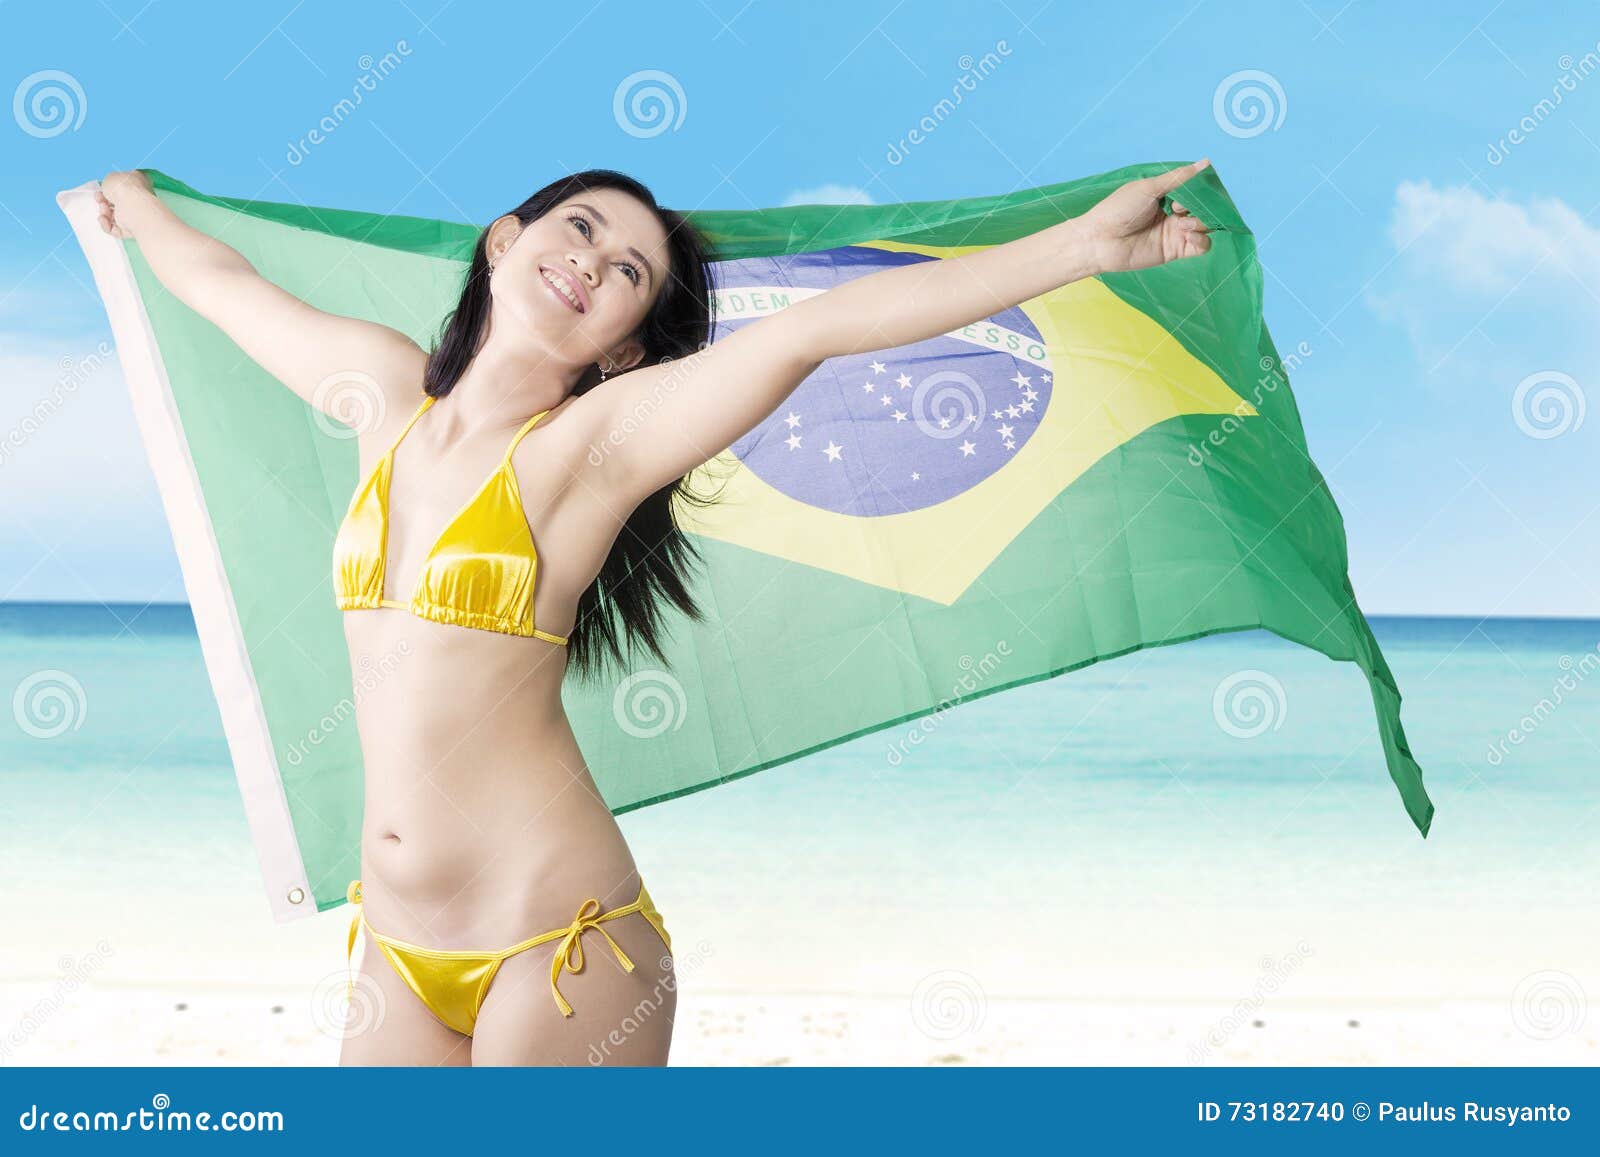 Beach brazilian bikini girls on